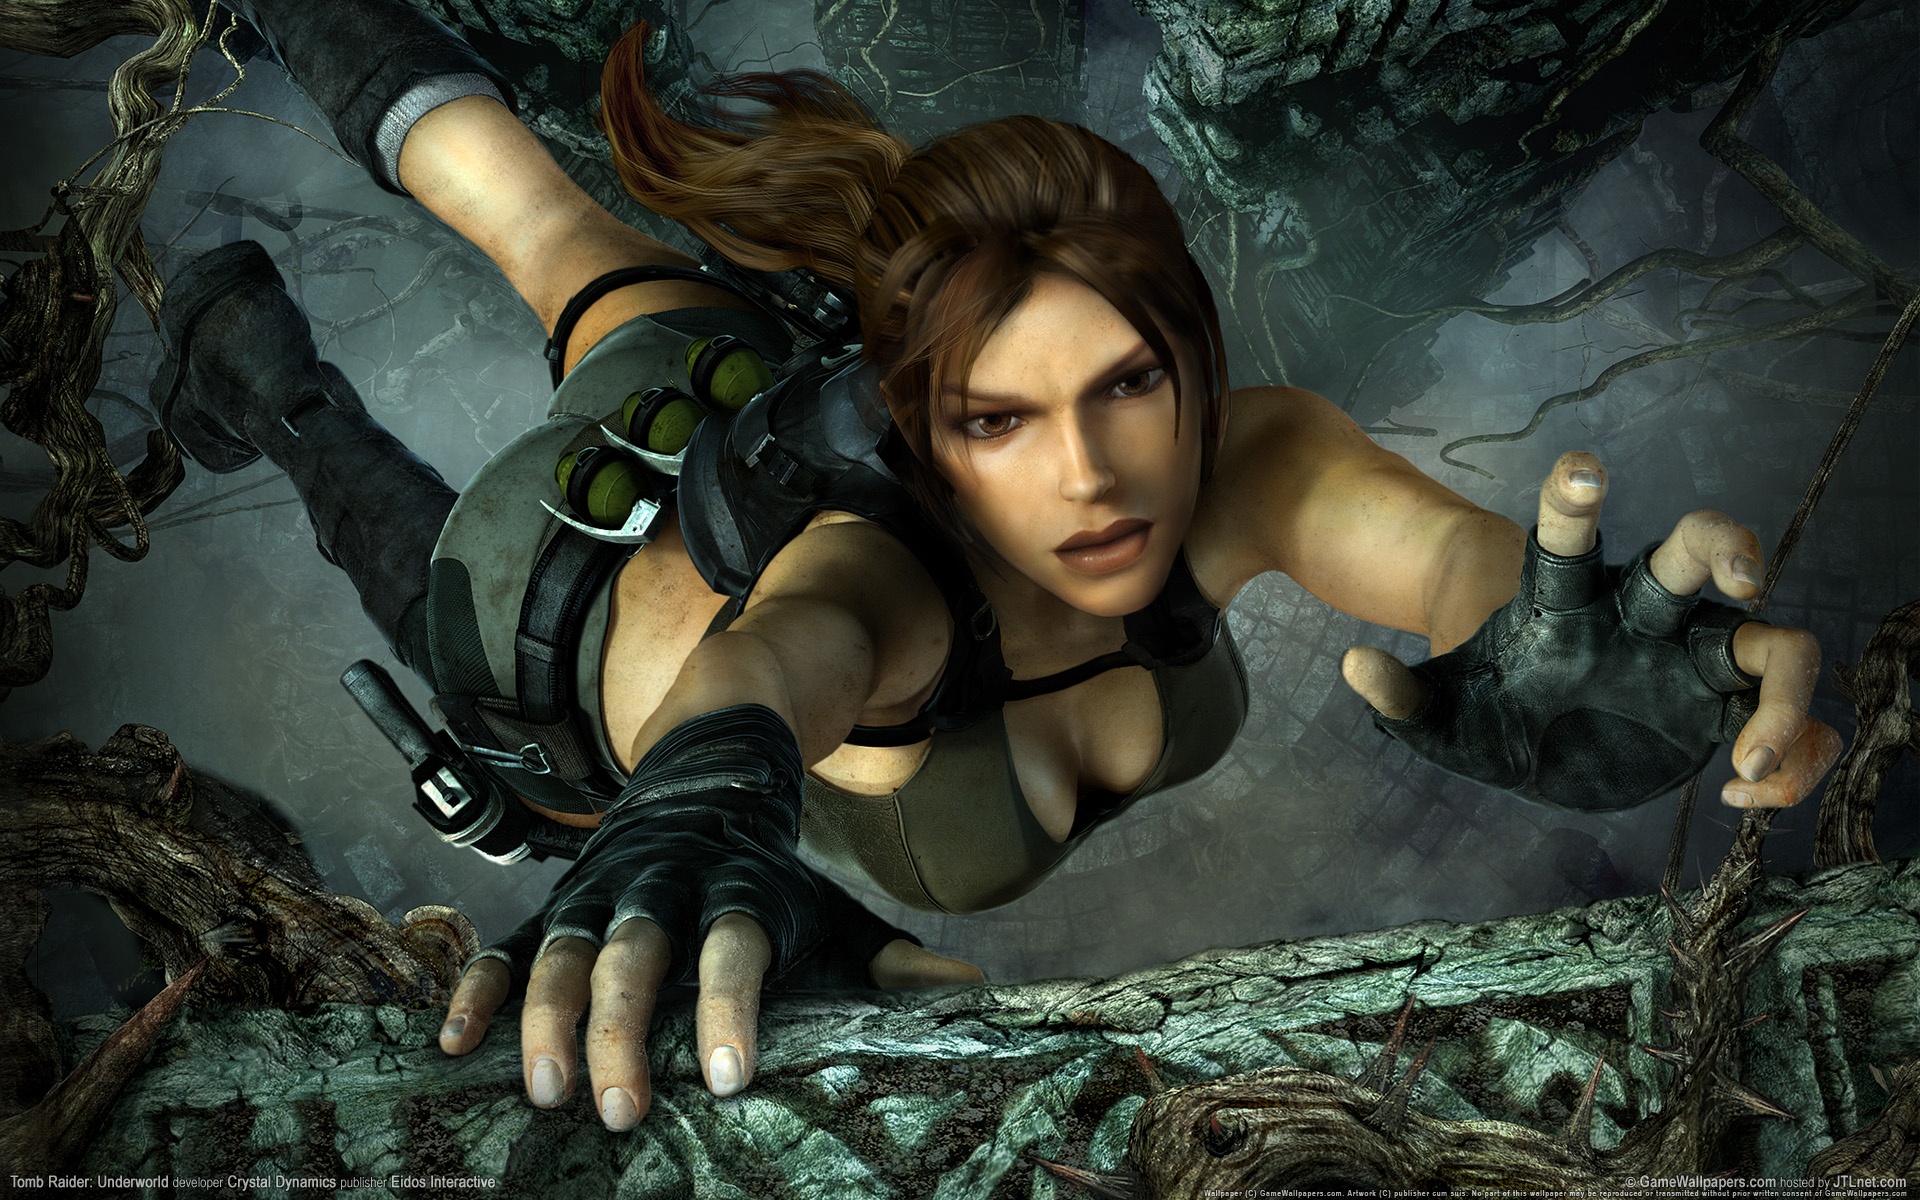  Download Tomb Raider Underworld HD Widescreen Games Wallpaper